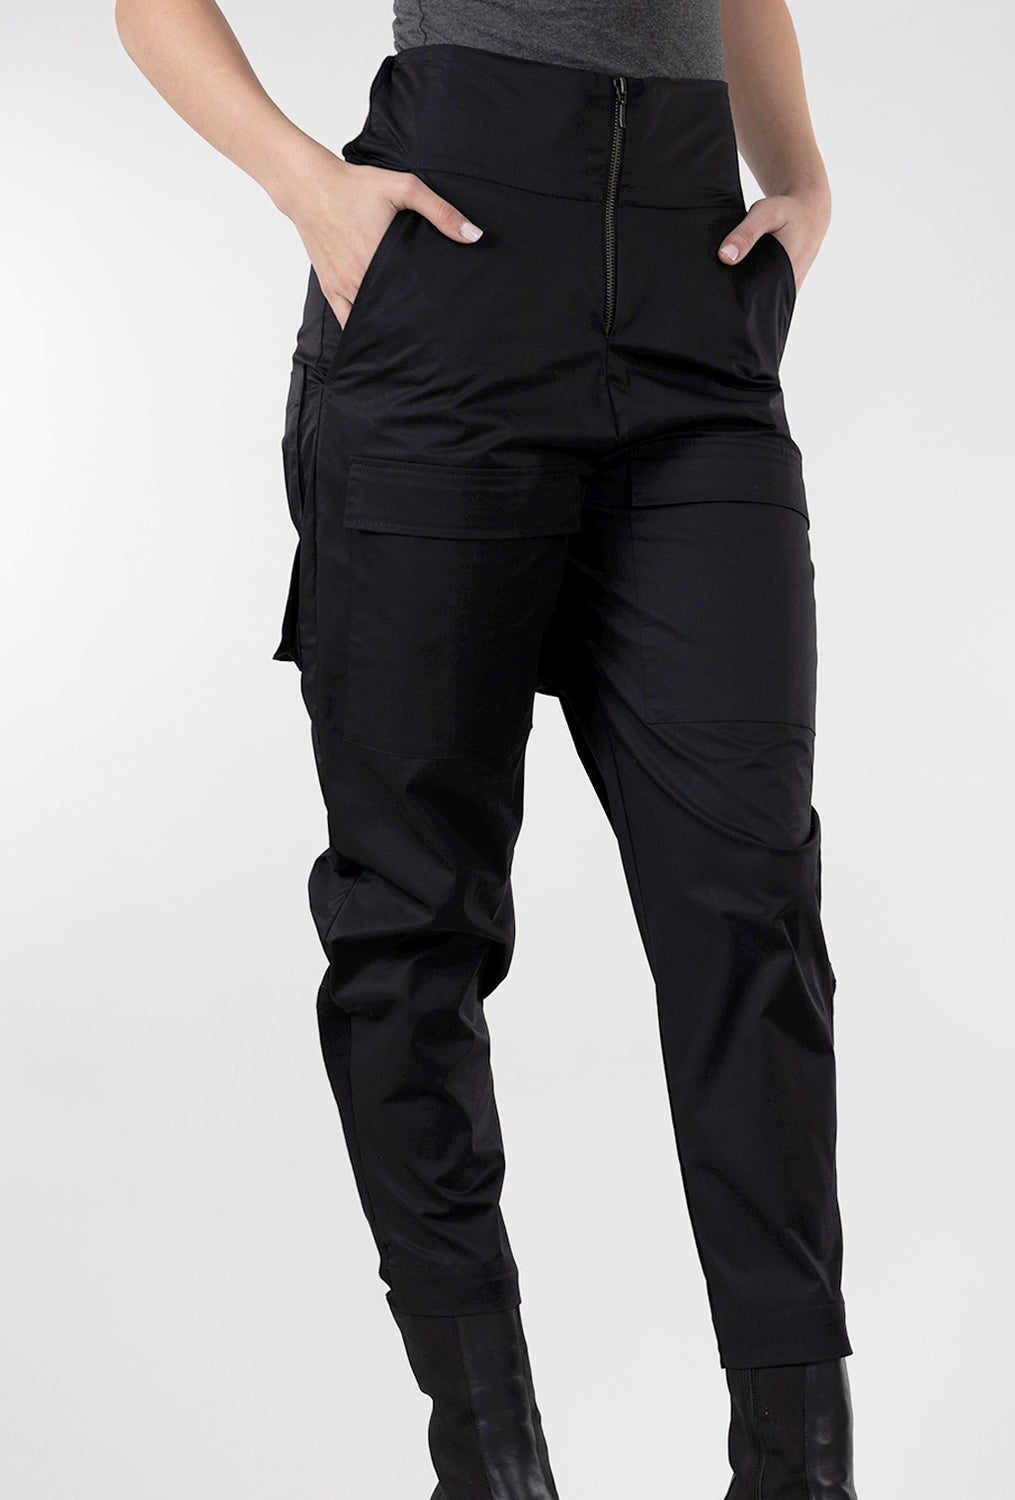 Kedziorek Exposed-Zip Pocket Trouser, Black 